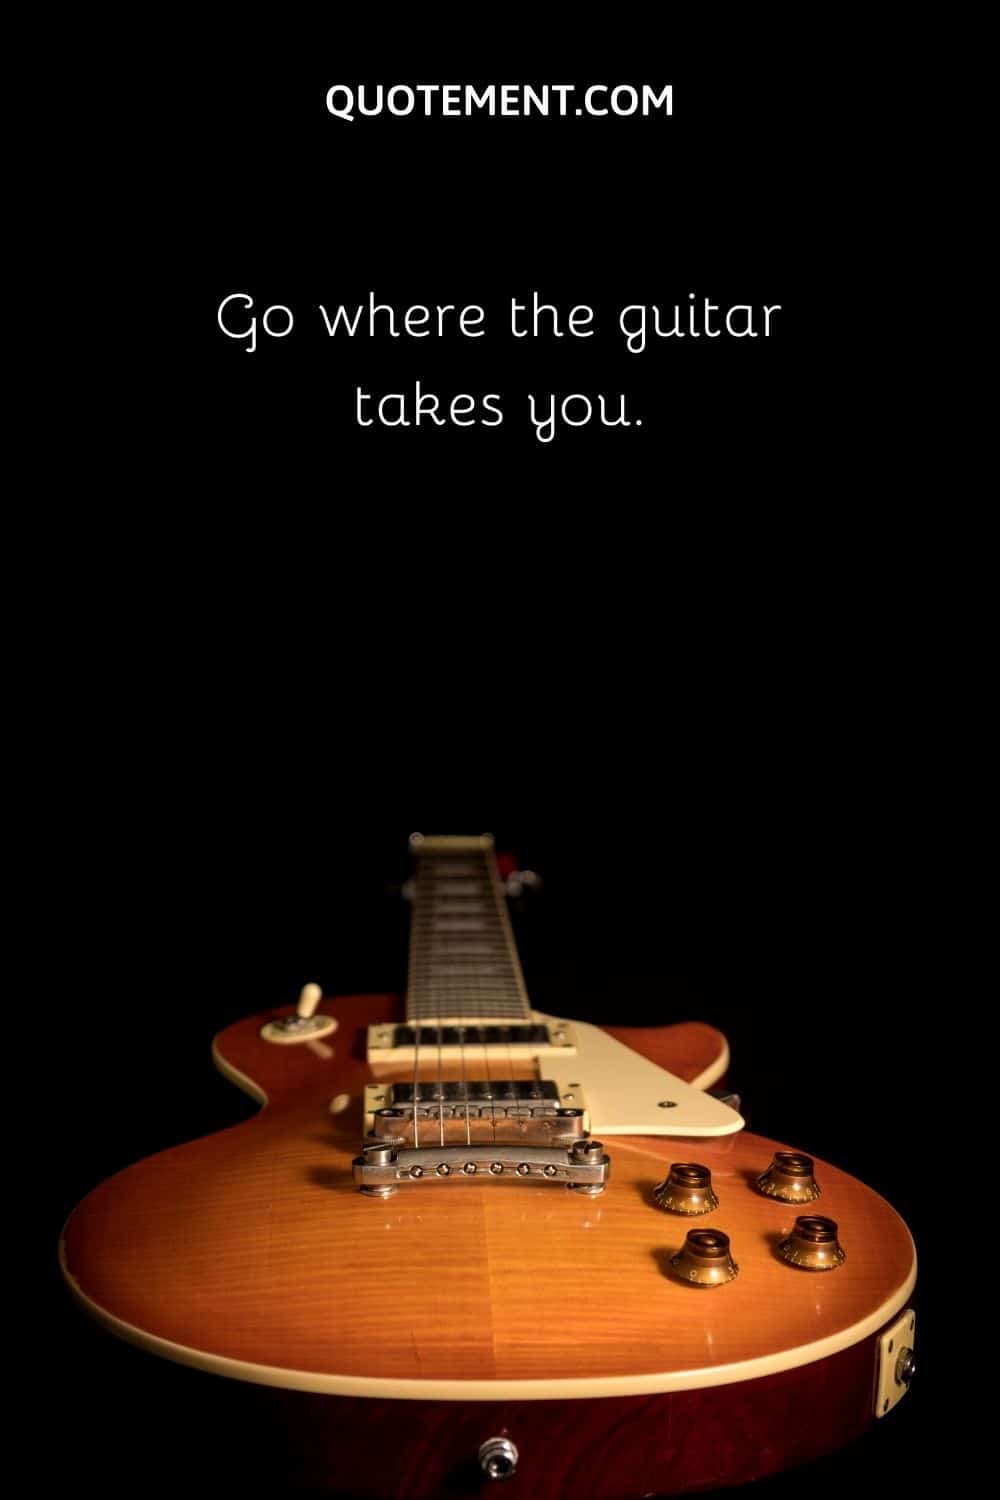 Go where the guitar takes you.